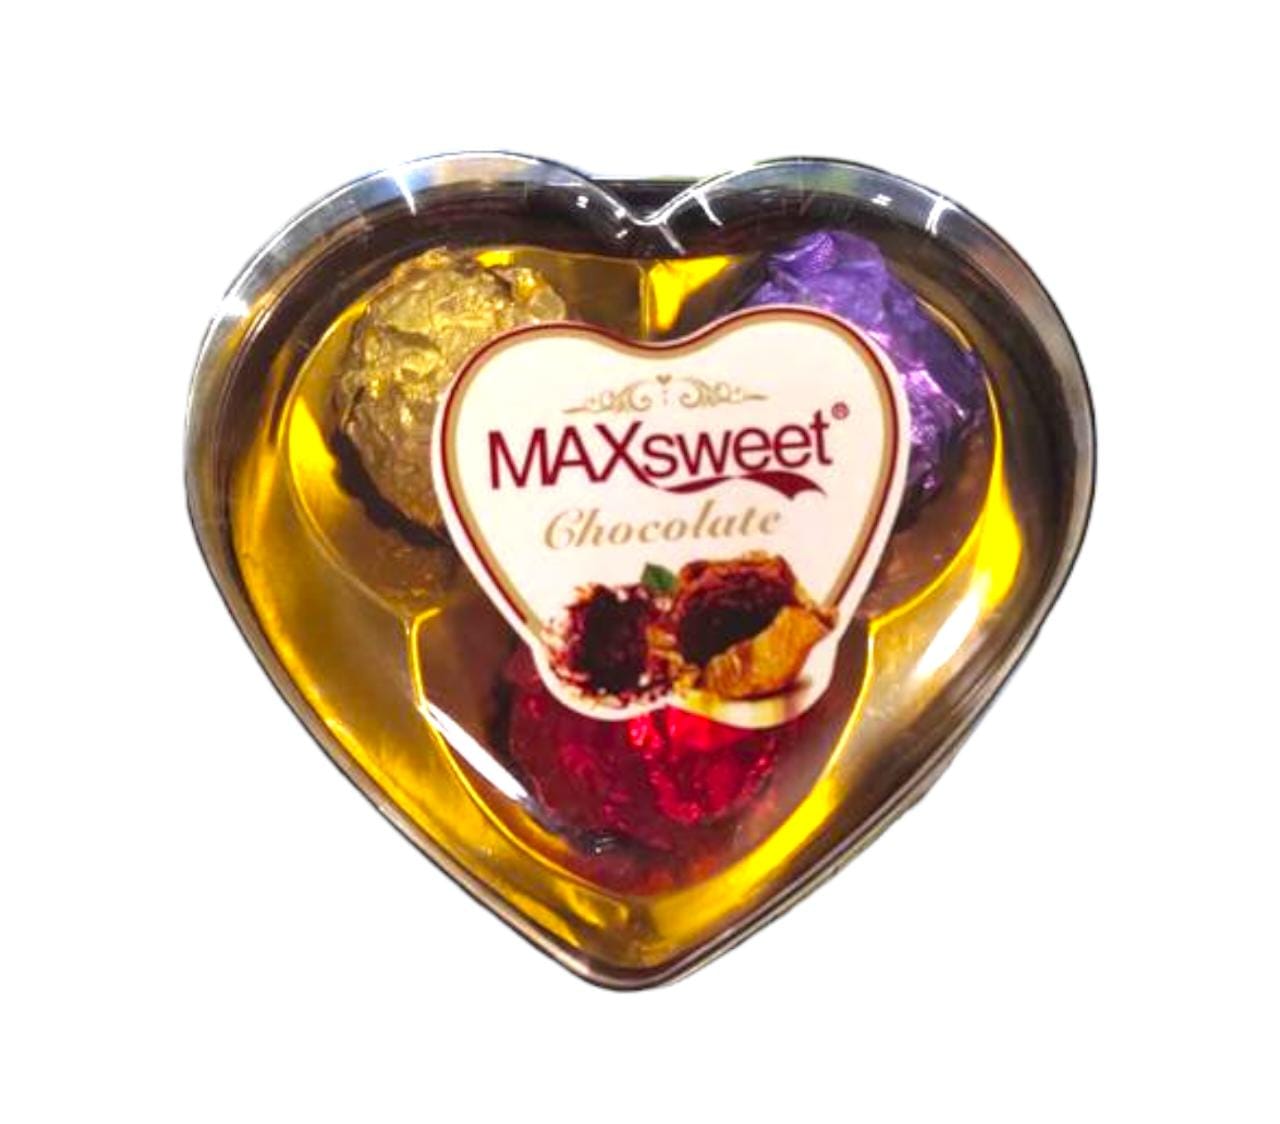 Maxsweet chocolate 